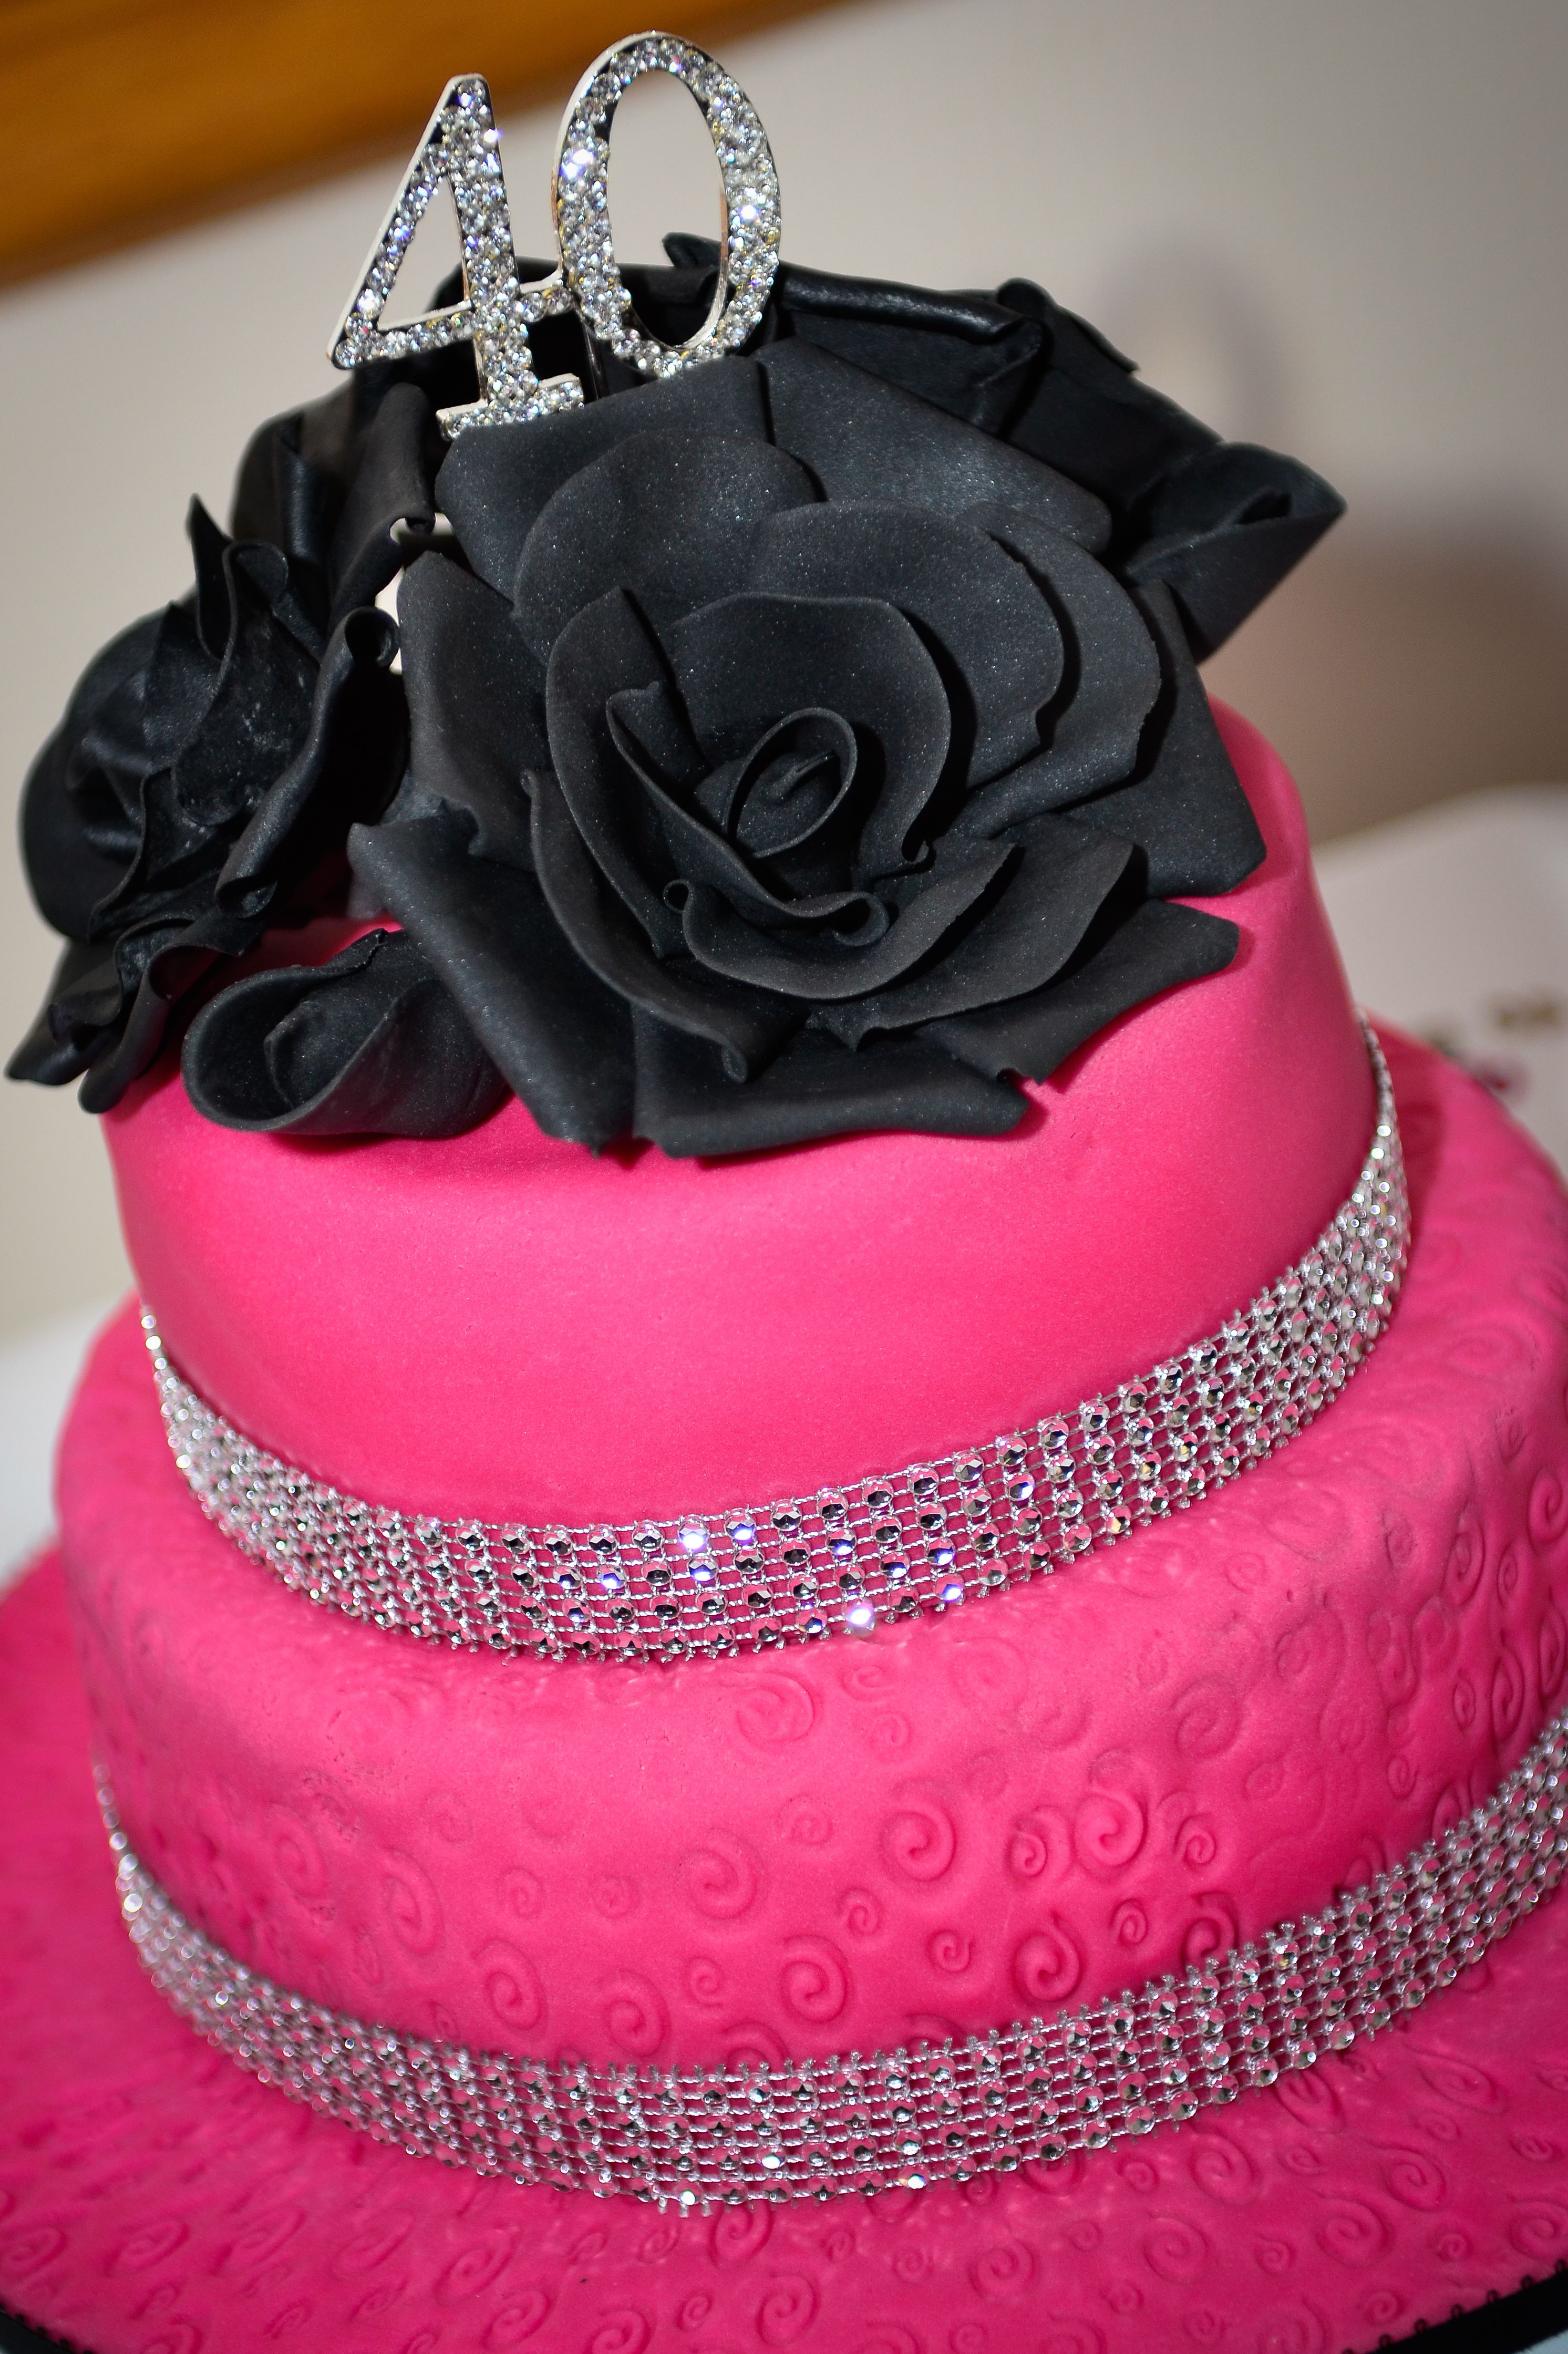 Черно розовый торт. Торт для женщины. Торт черно розовый. Торт черный с розовым. Черно розовый торт для девочки.